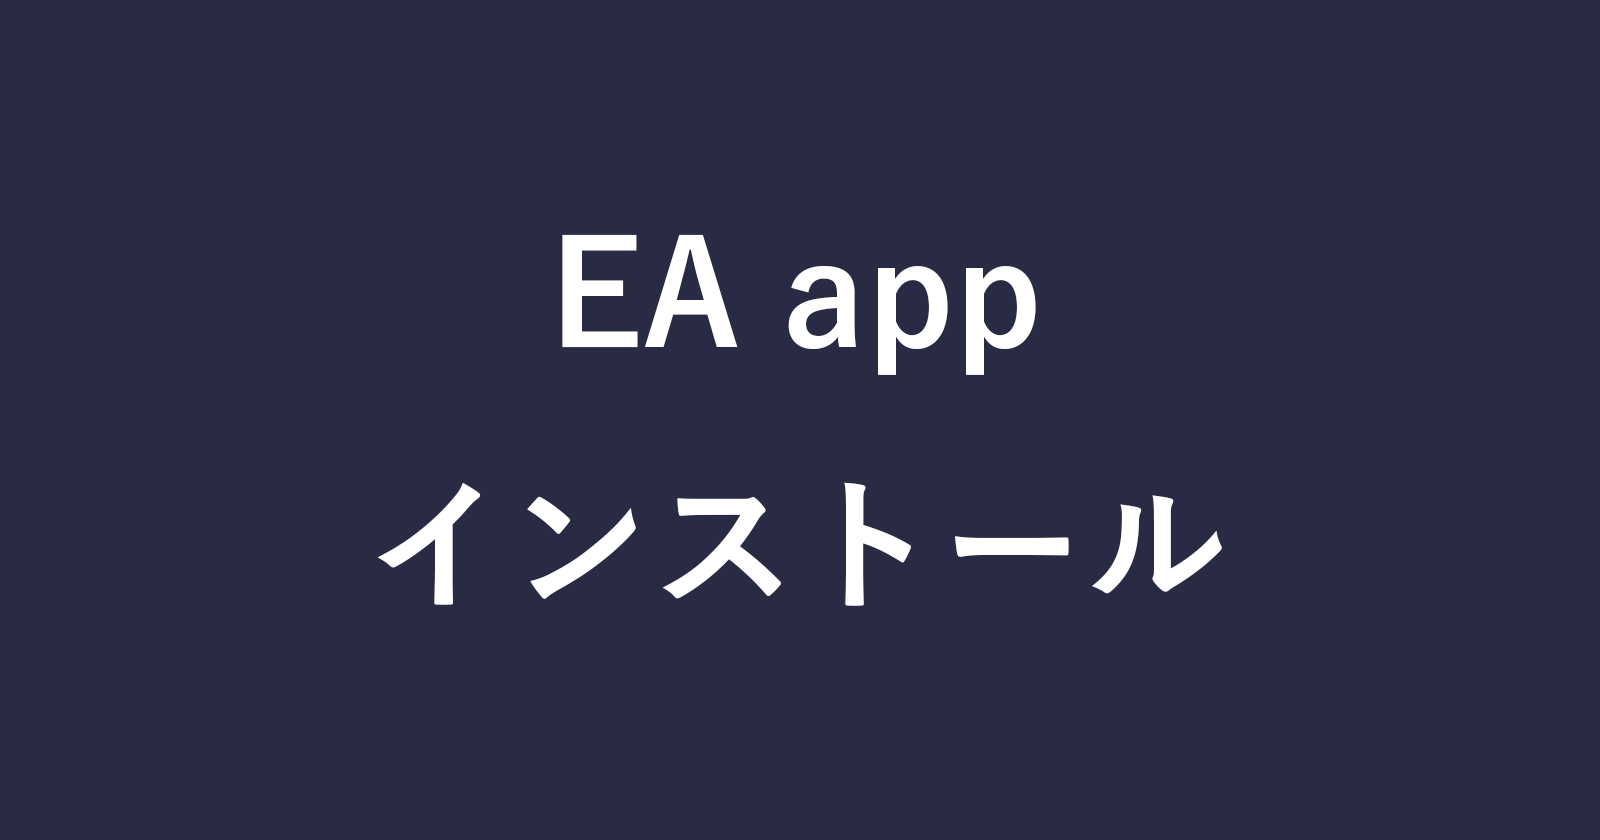 EA app をインストールする方法